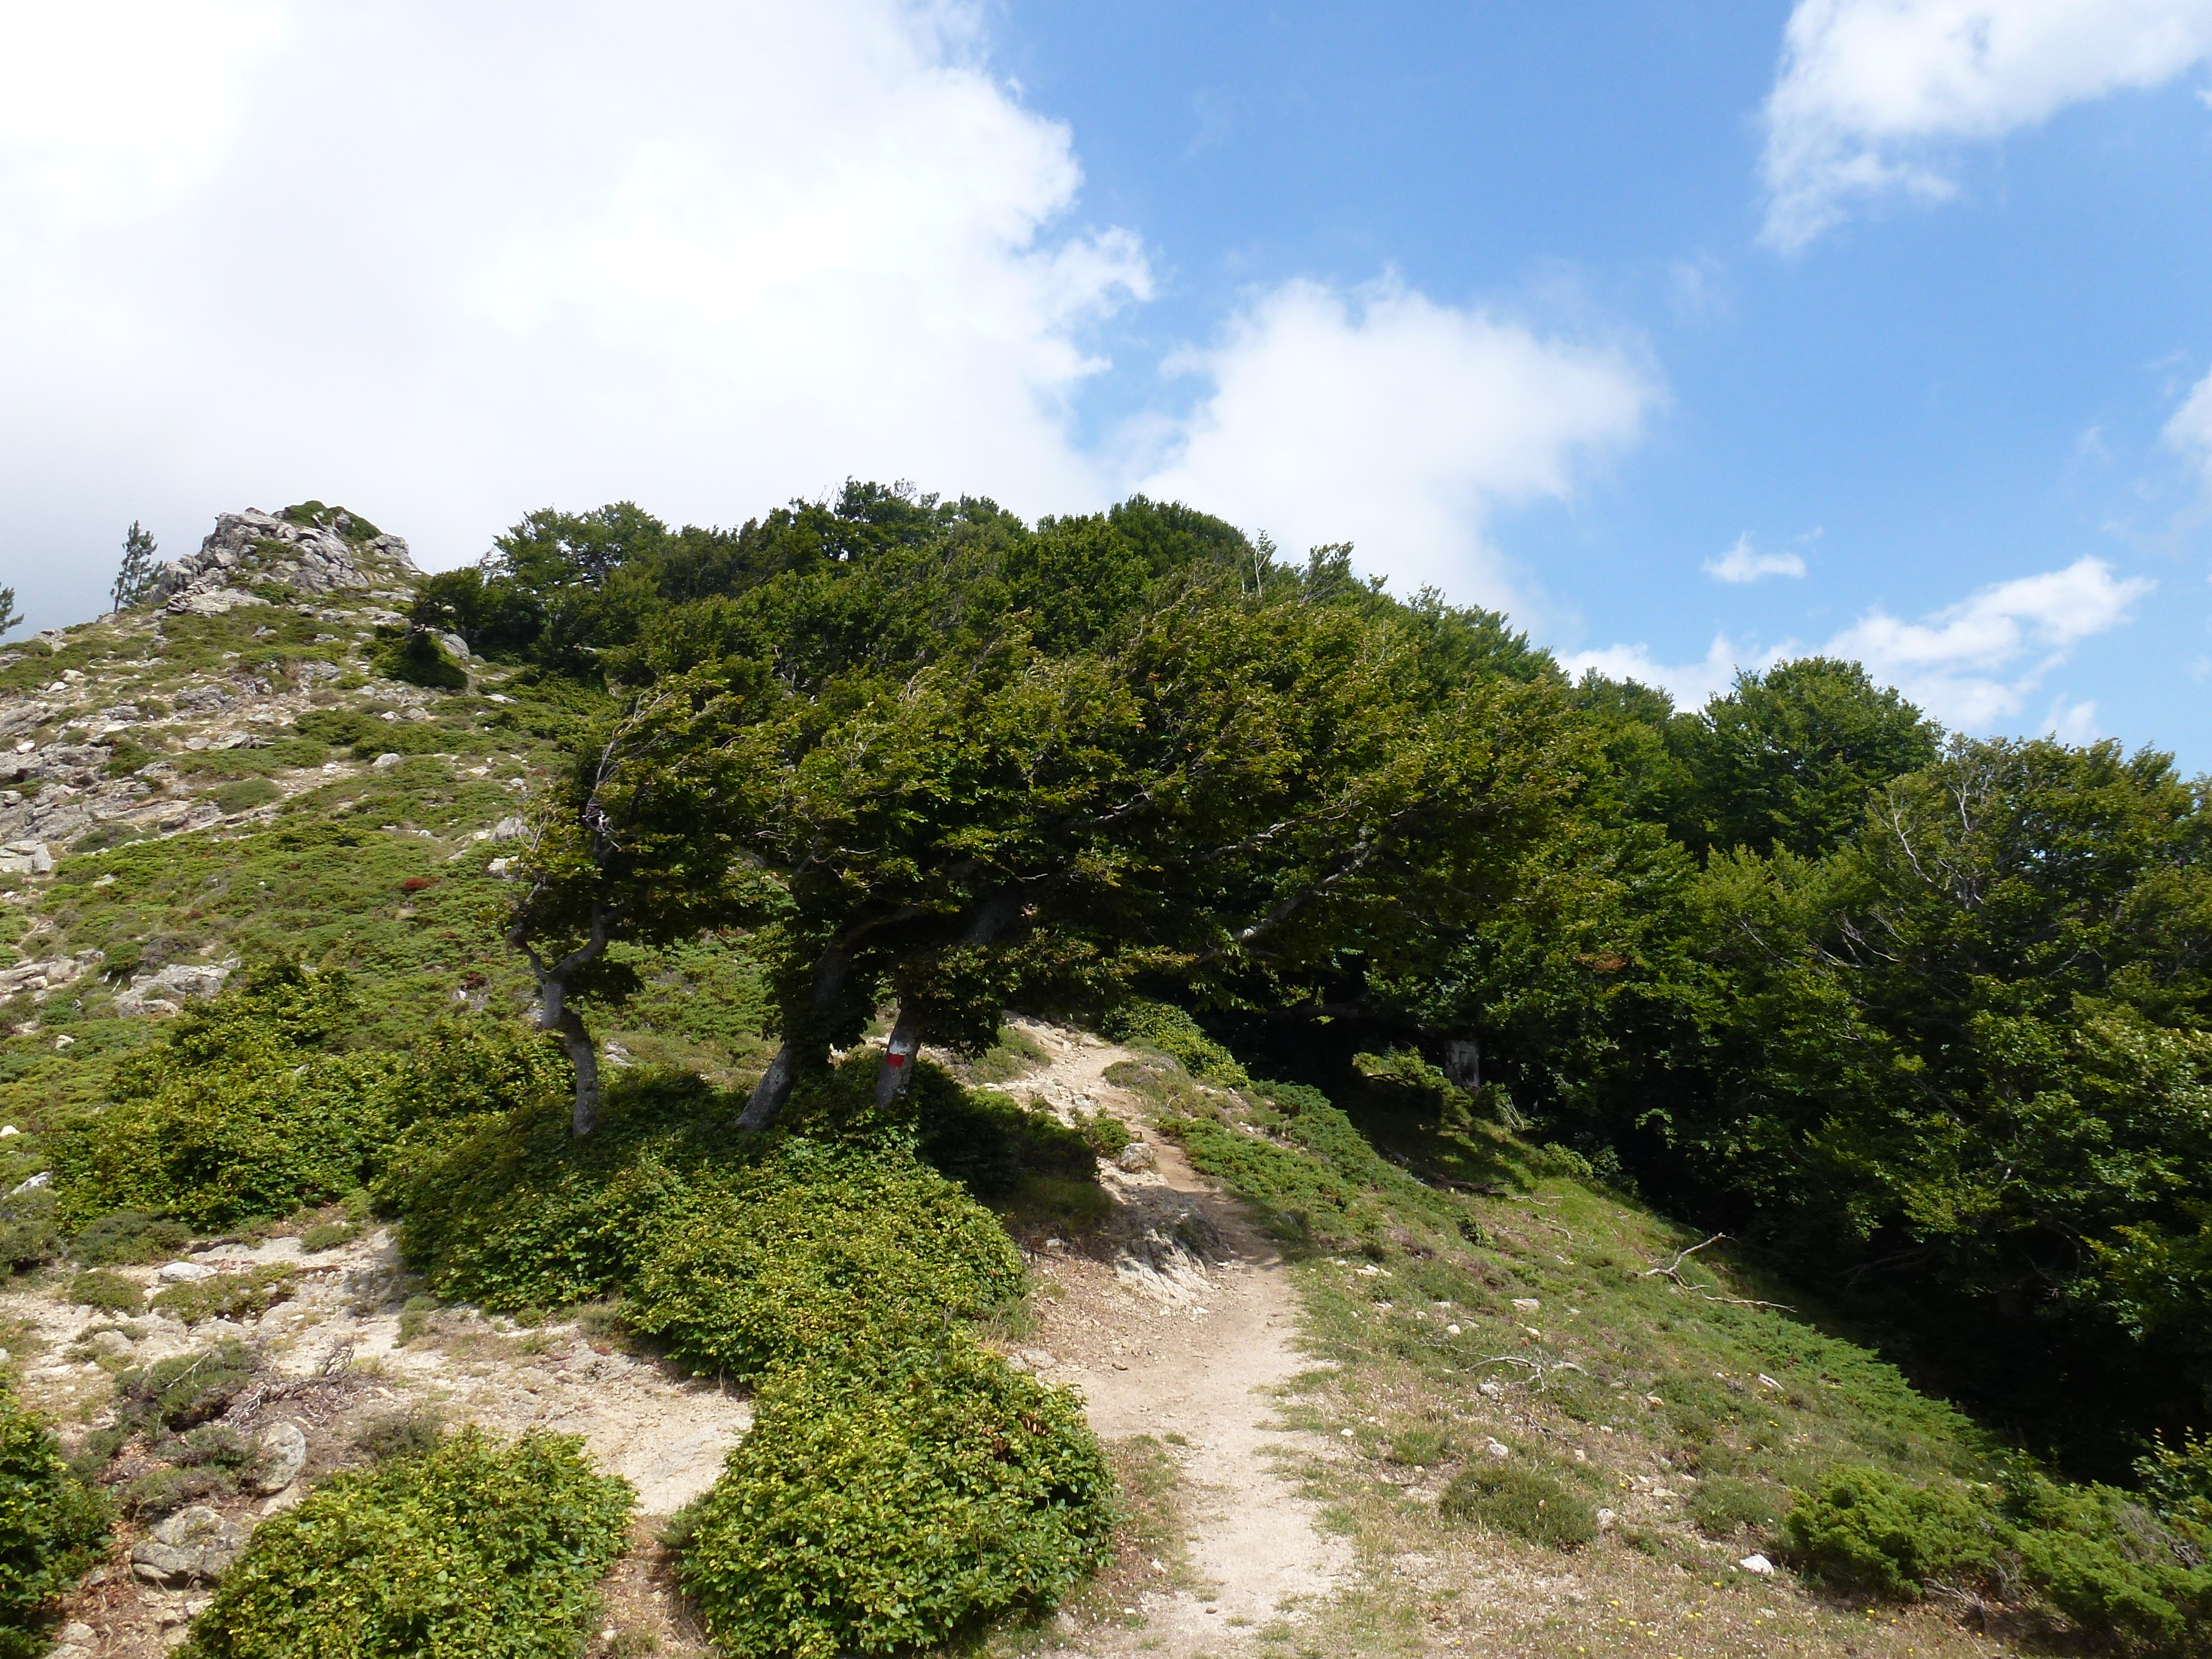 Windswept trees on Bocca di Laparo on the GR20